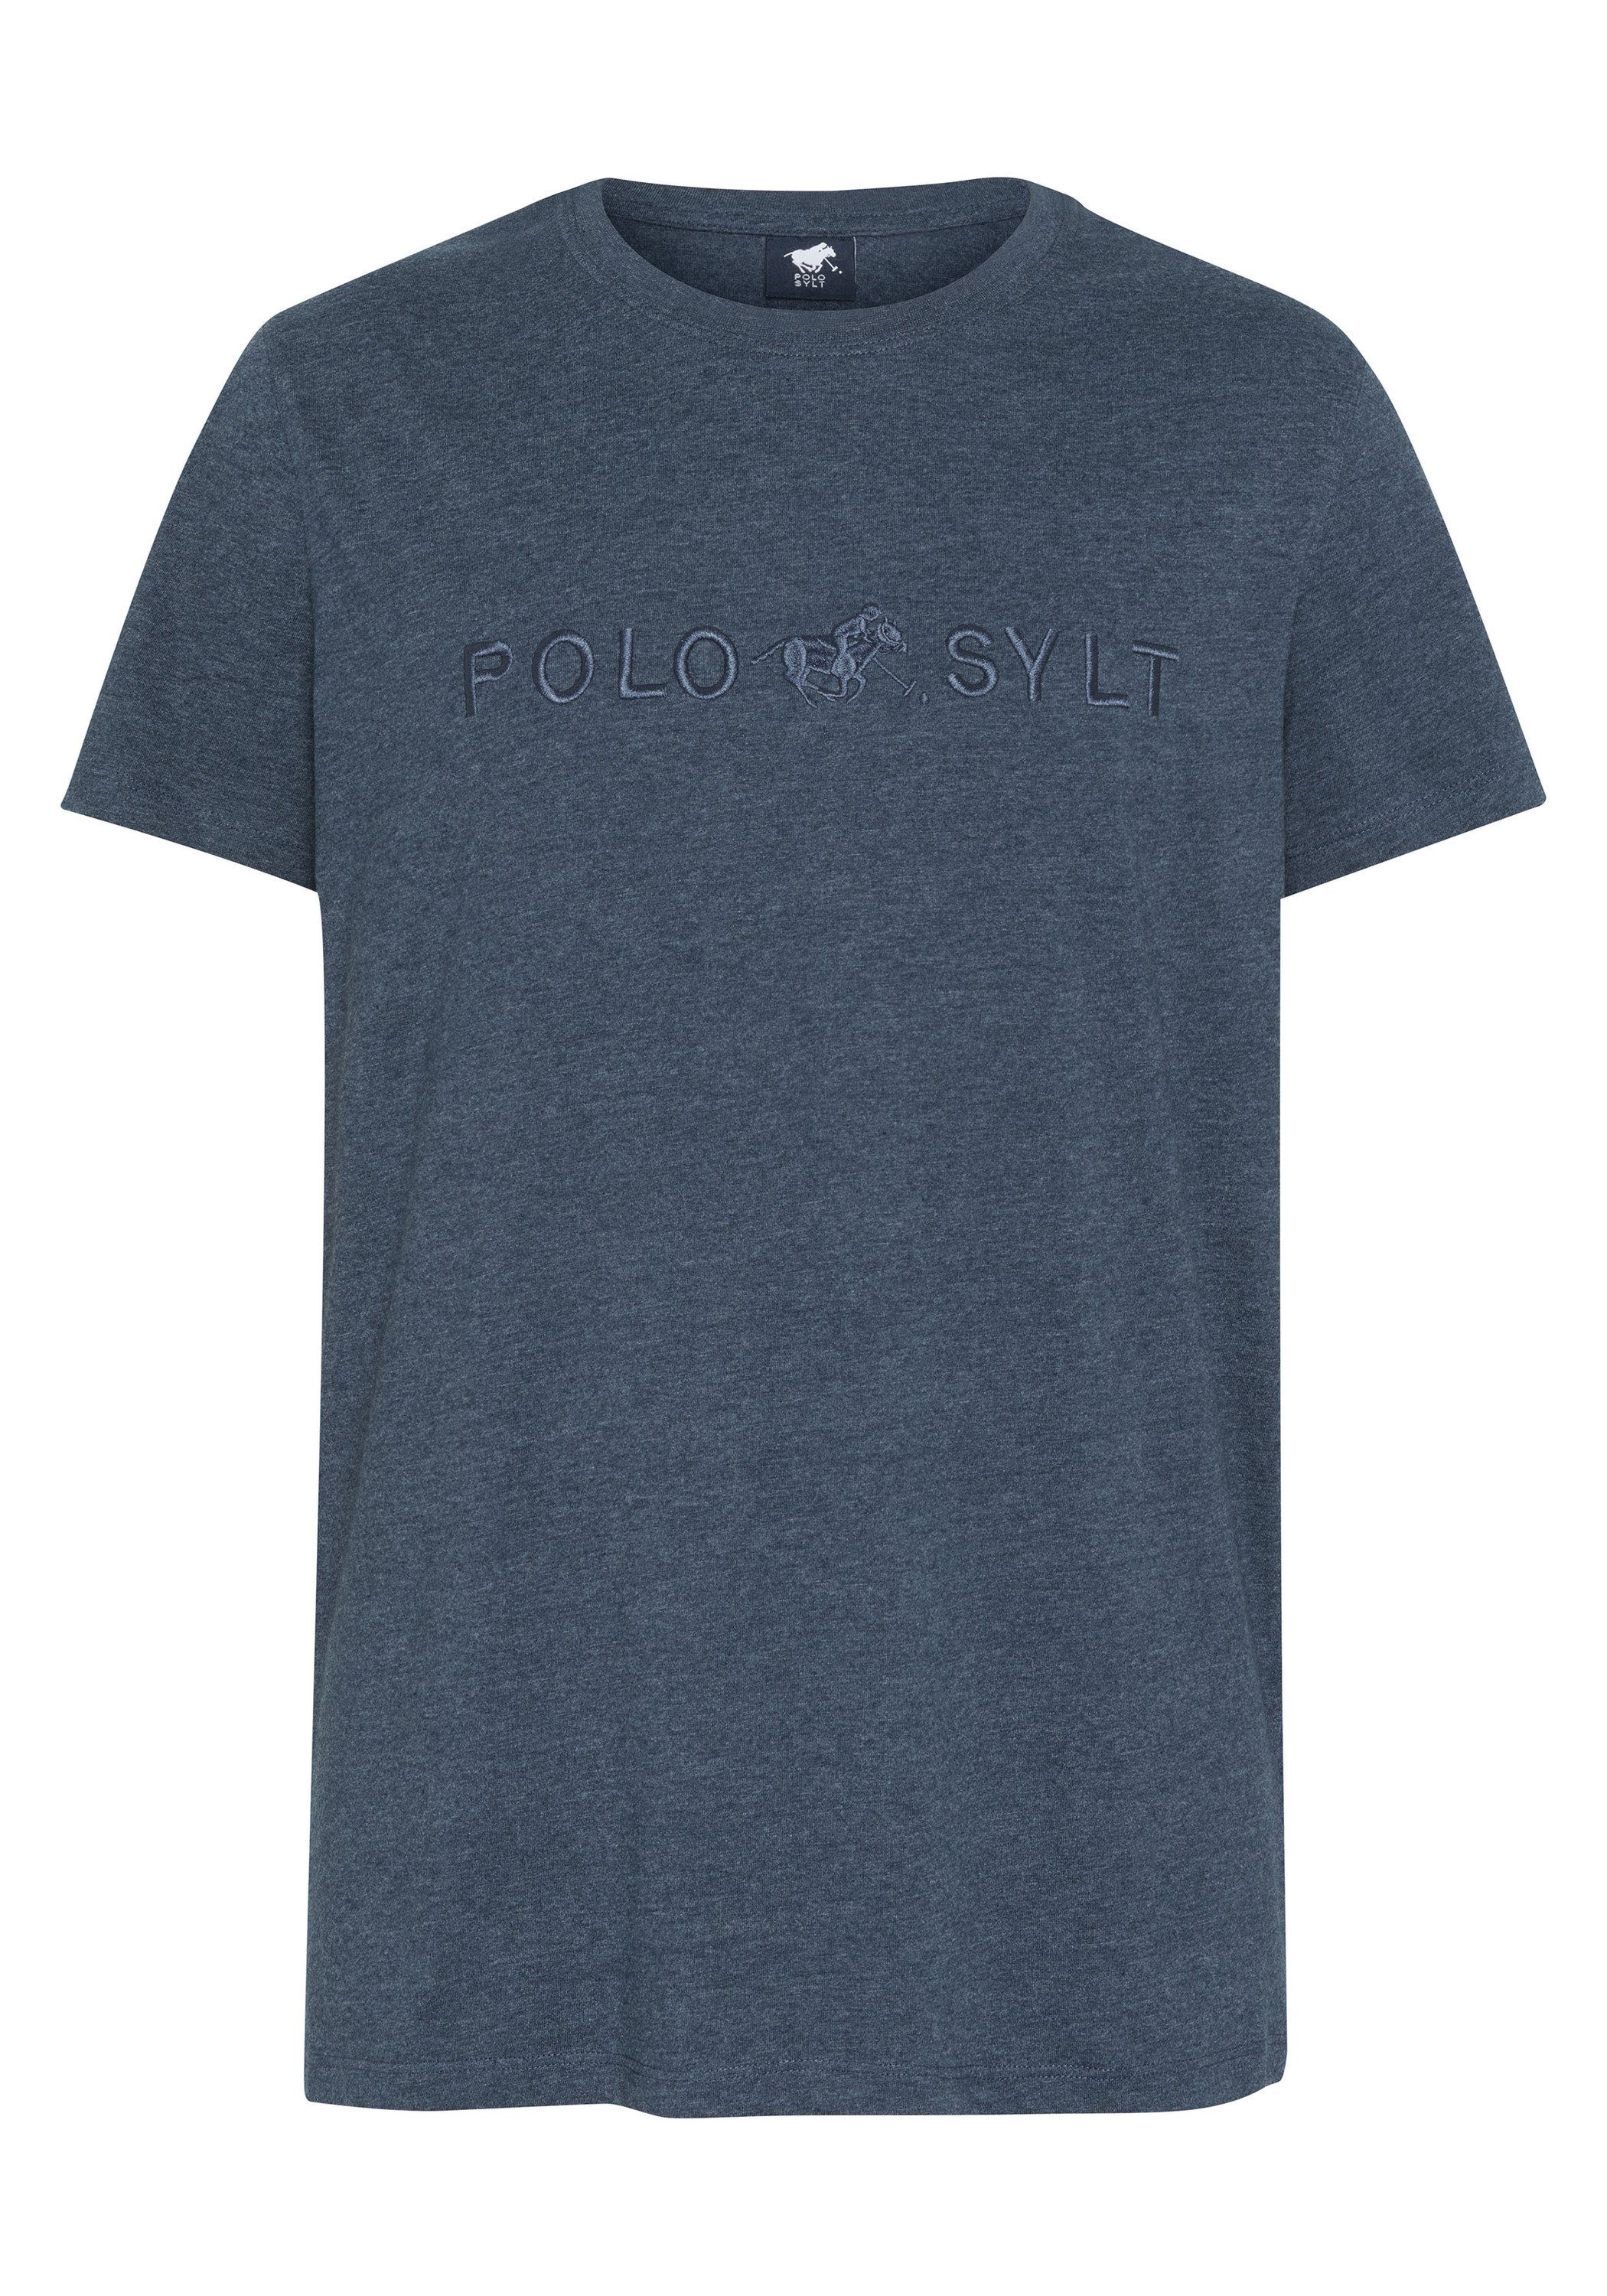 Polo Sylt Print-Shirt mit Logo-Schriftzug 19-4010M Total Eclipse Melange